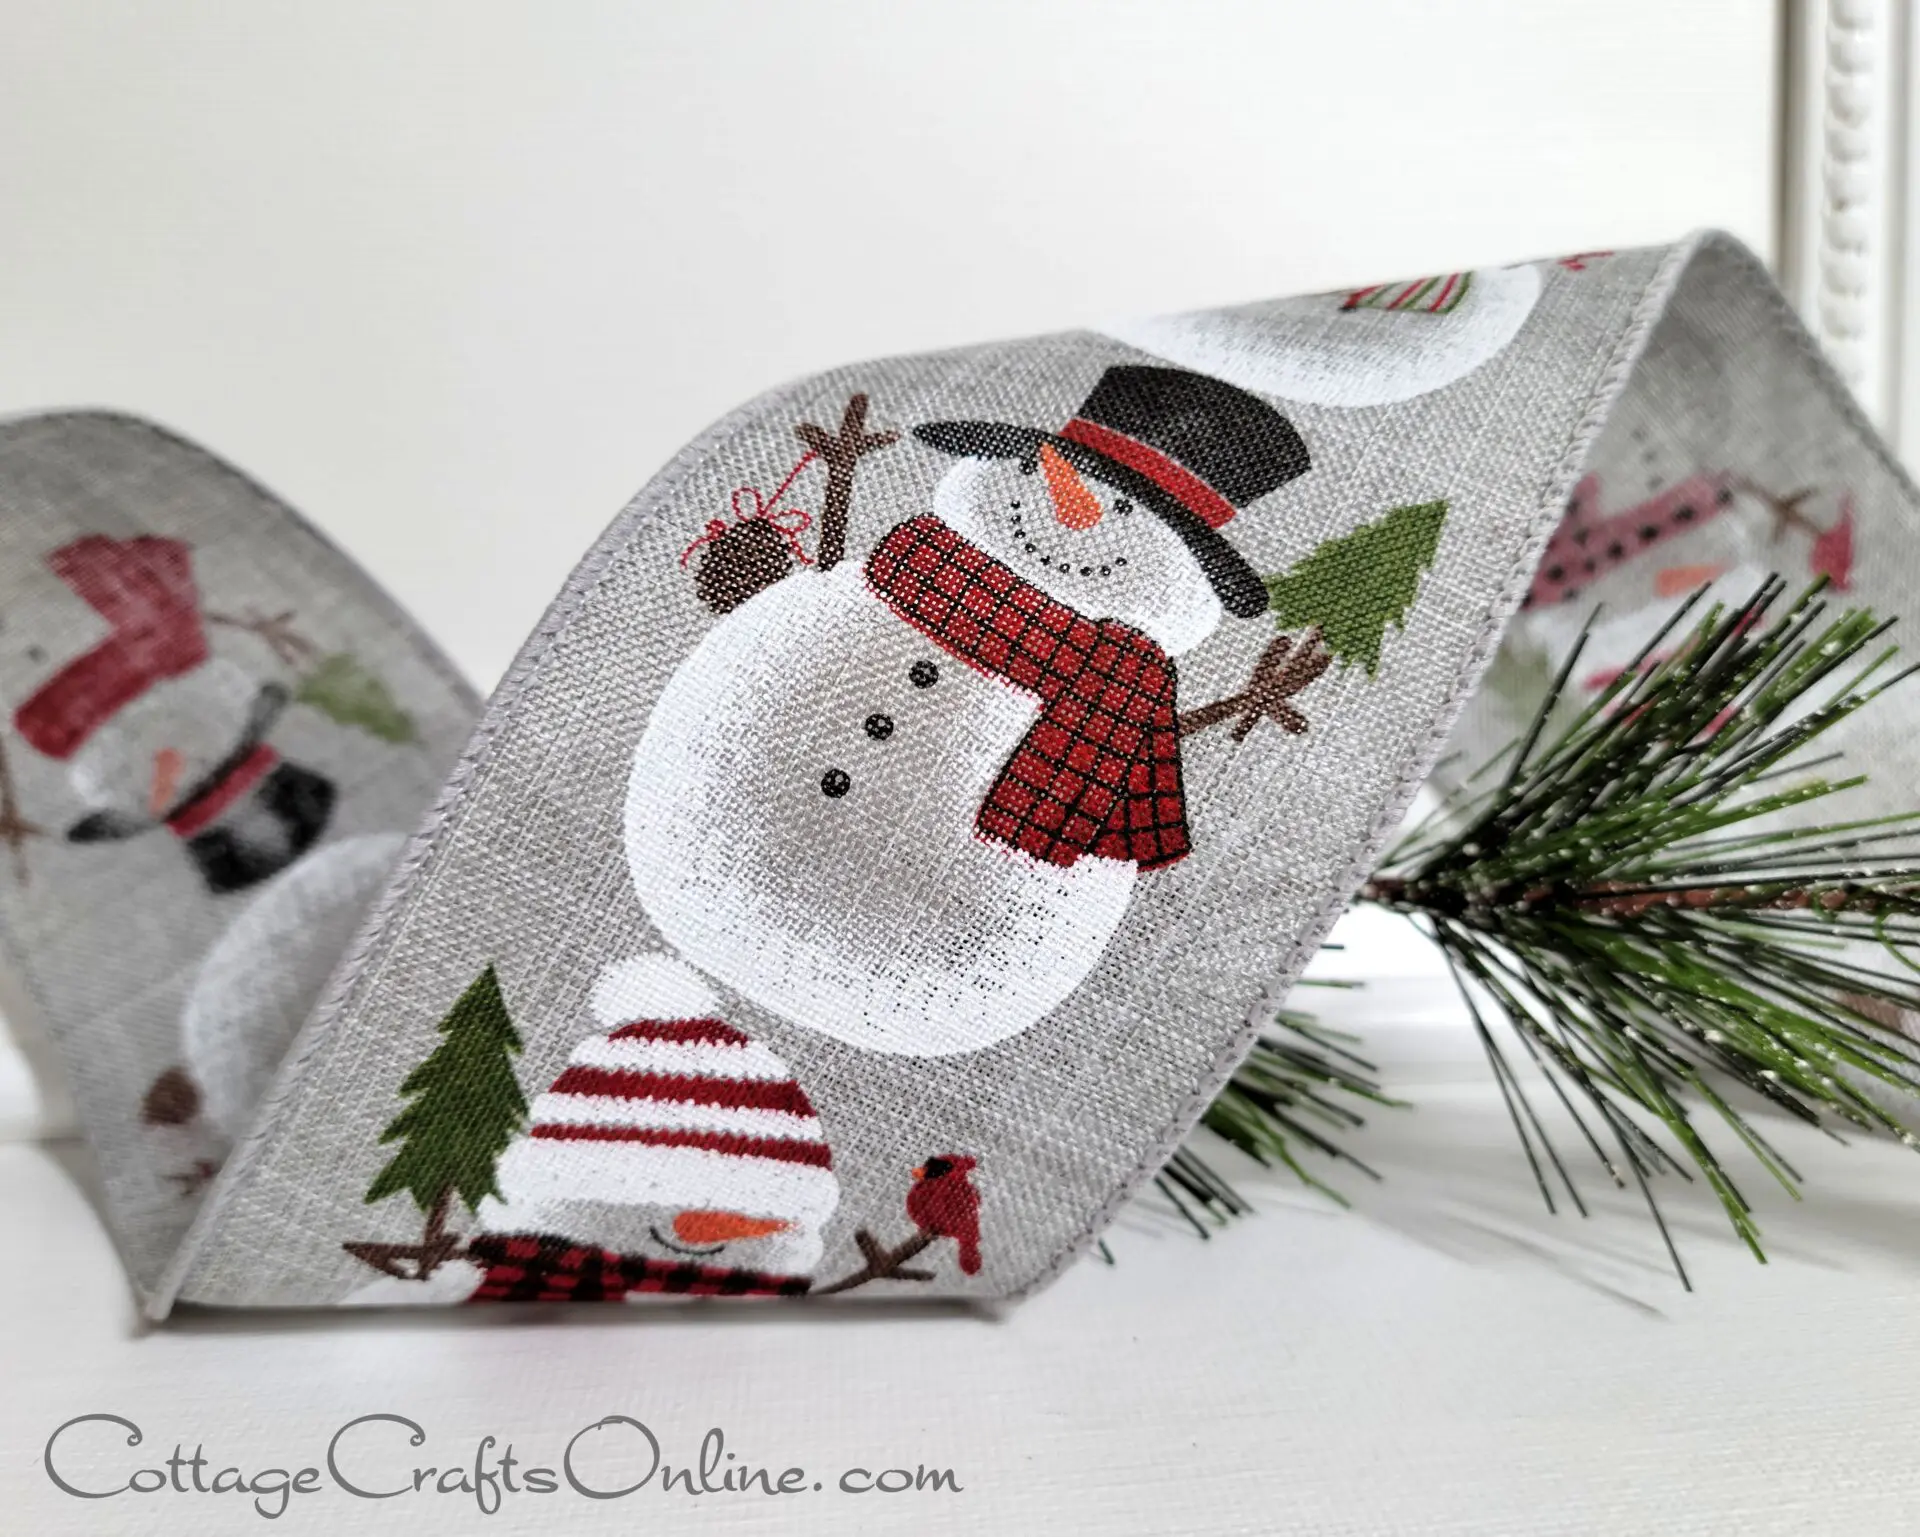 a festive holiday ribbon with snowmen motif.